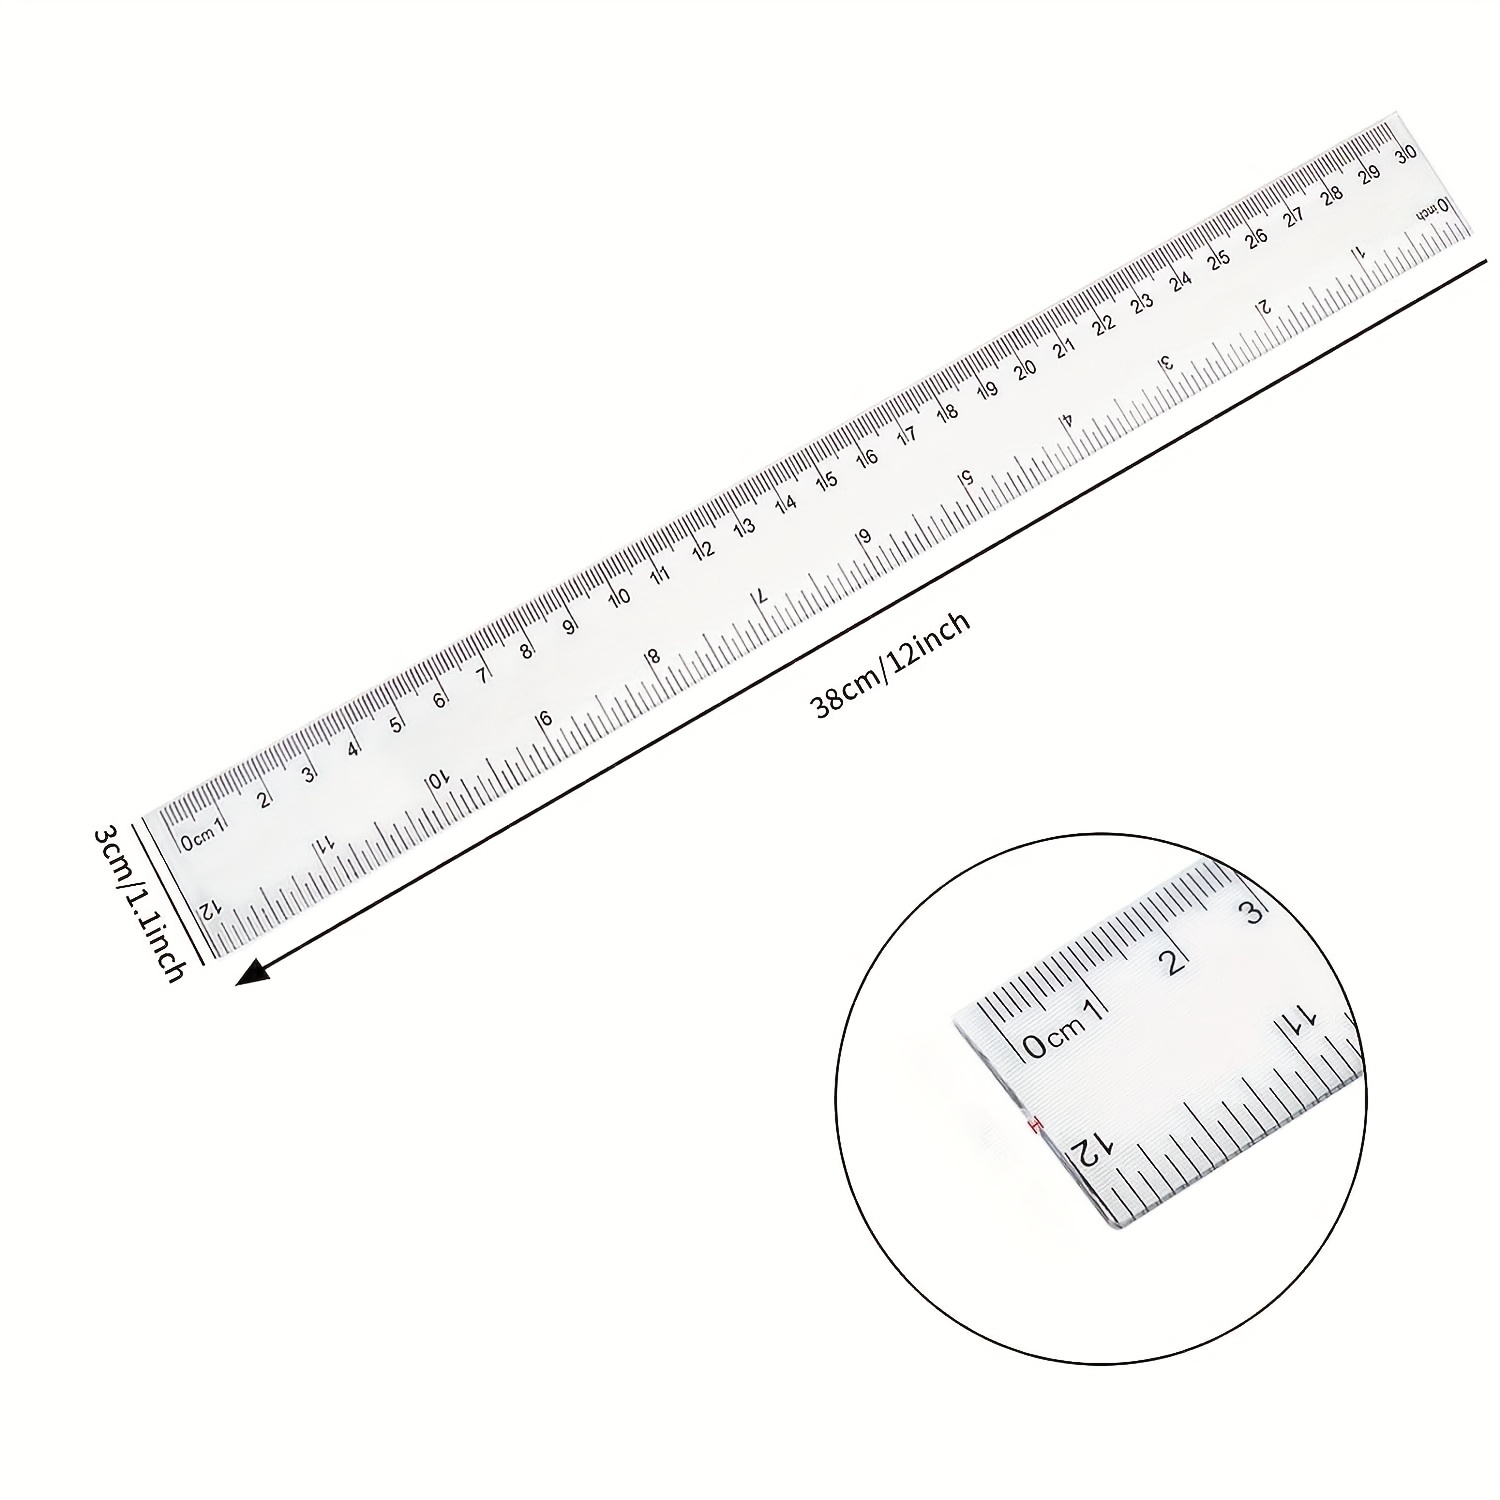  Color Transparent Ruler Plastic Rulers - Ruler 12 inch